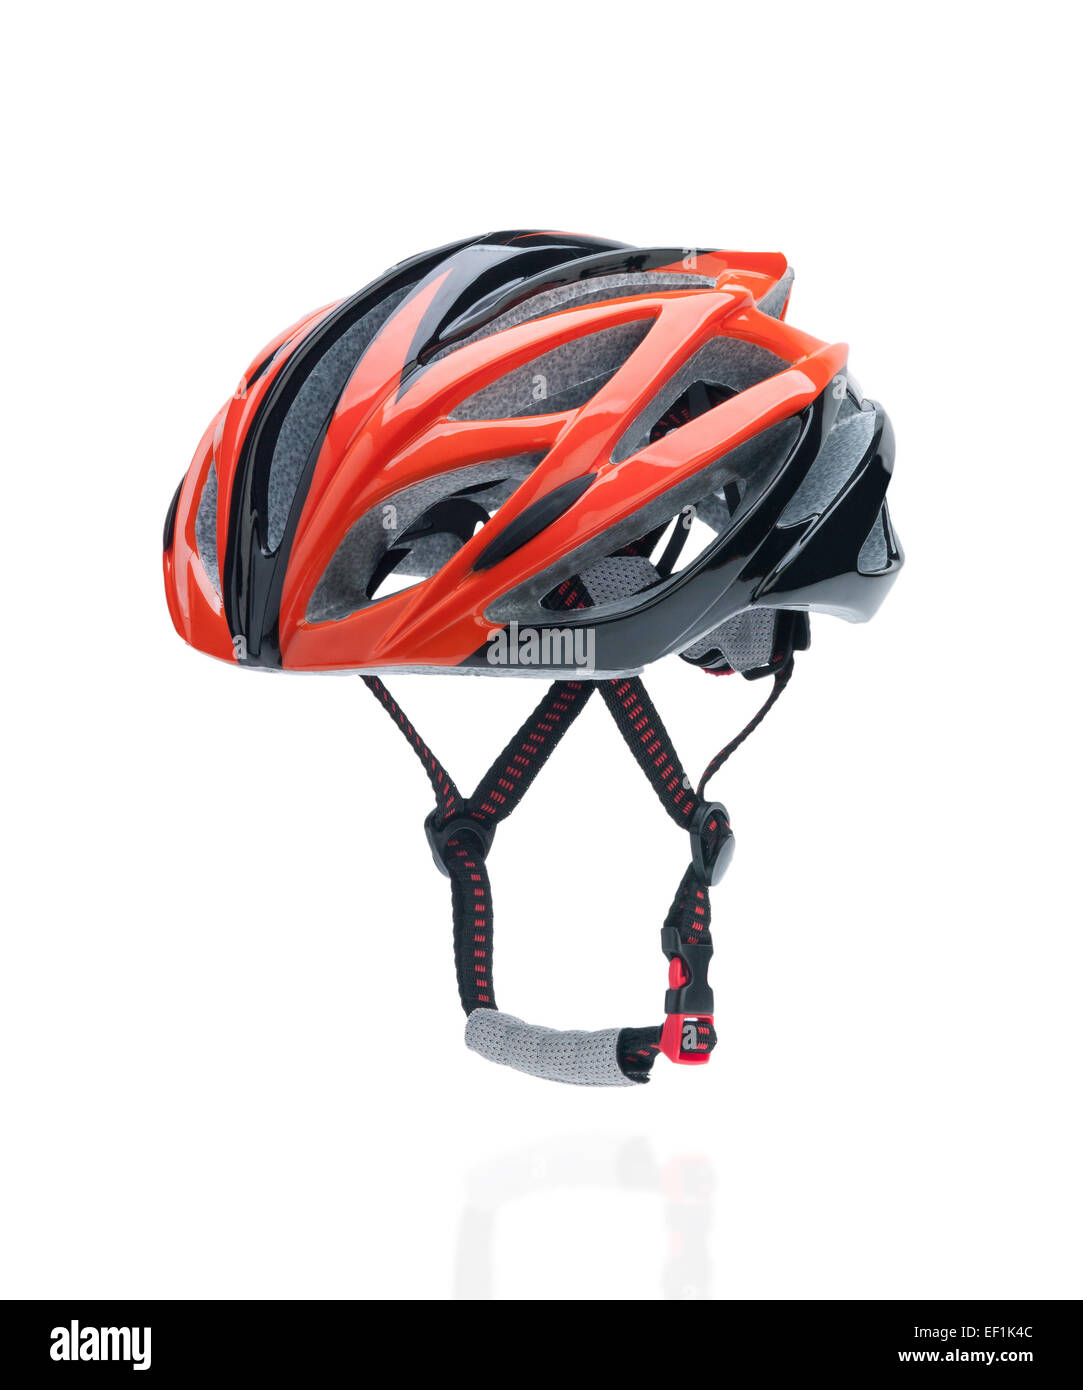 Bicycle mountain bike safety helmet isolated on white Stock Photo